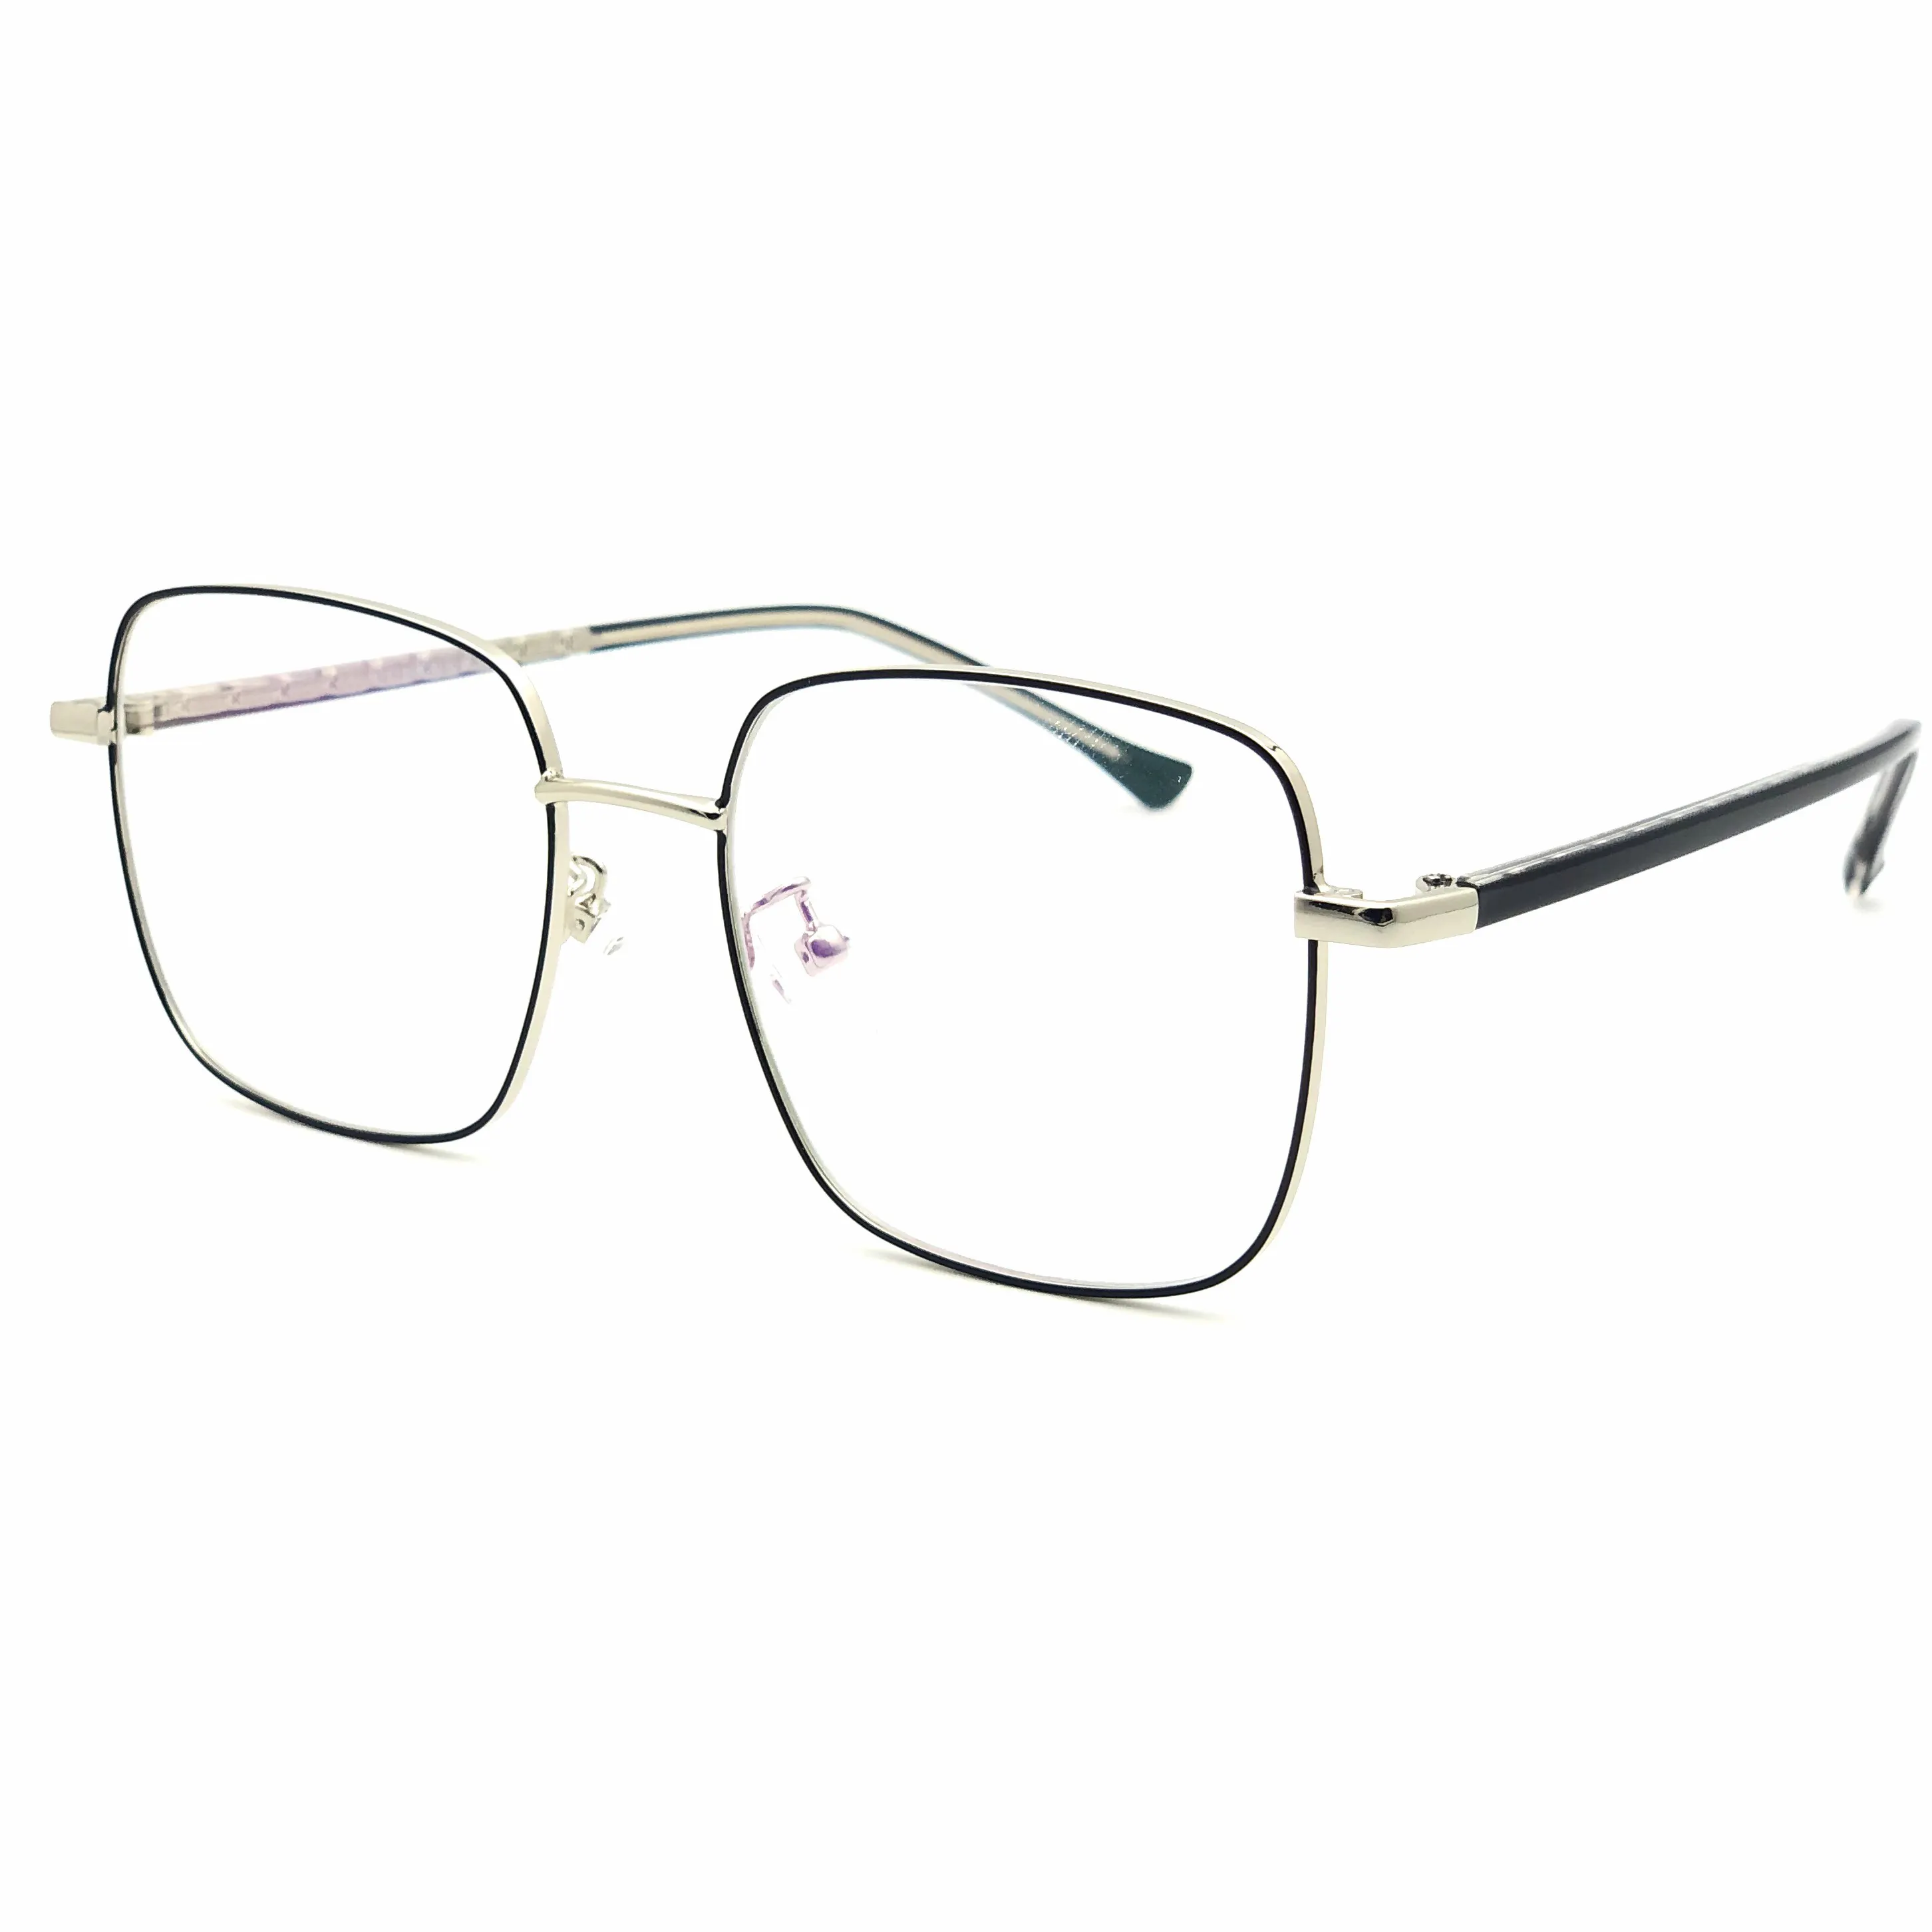 New Blue Light Block Eyeglasses Retro Spectacle Eyewear Optical Glasses Metal Frames